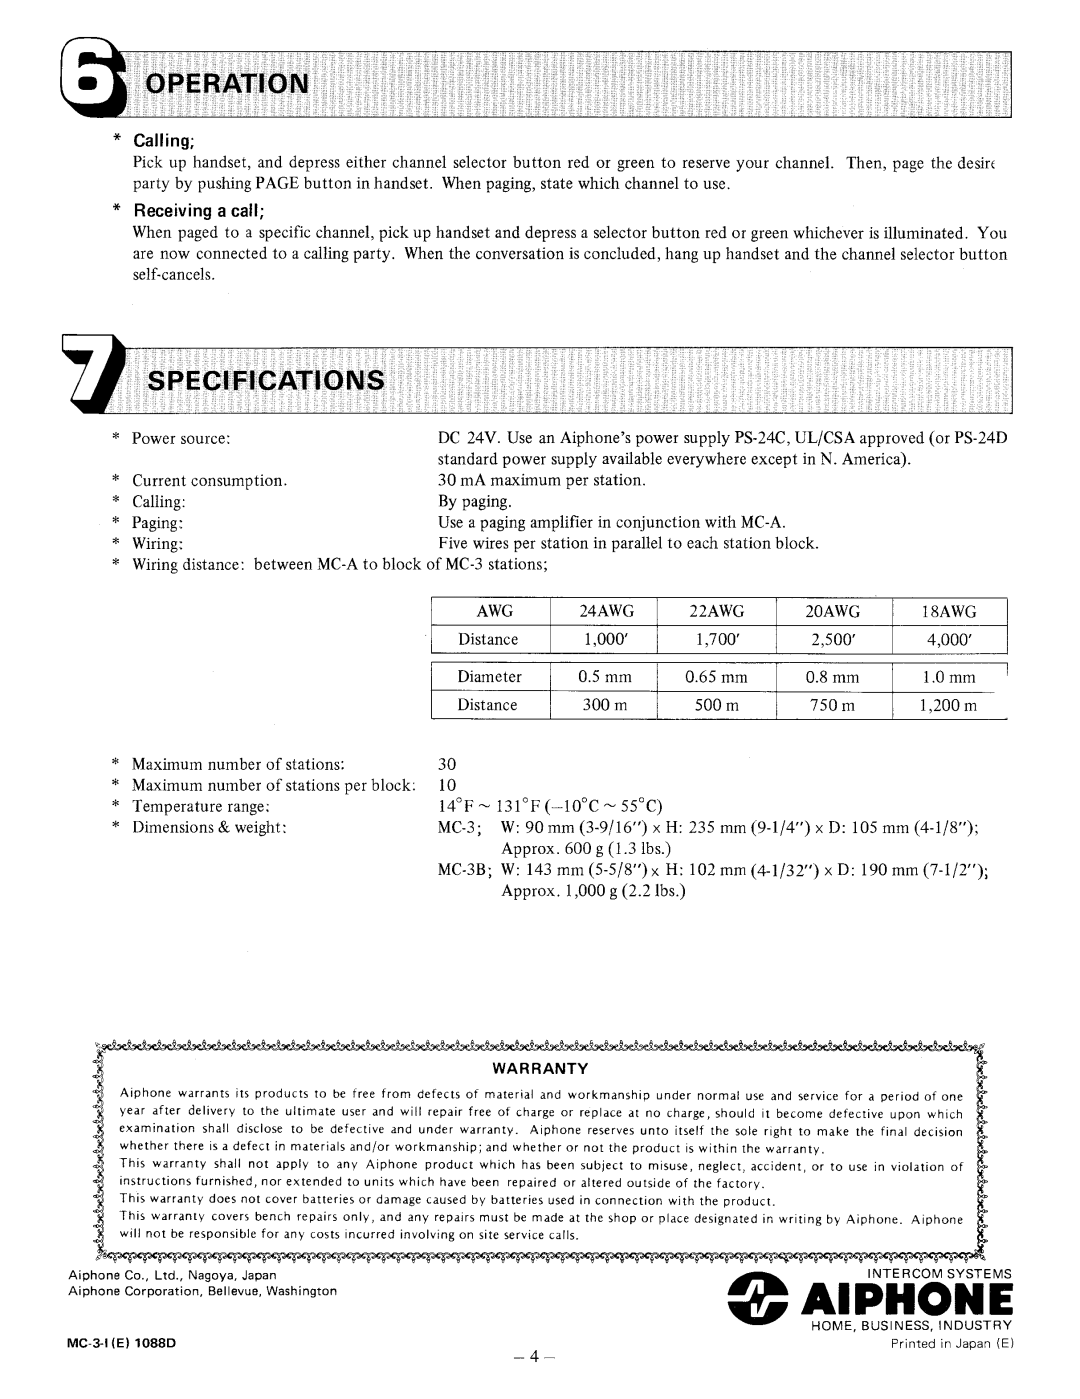 Aiphone MC-3B manual 